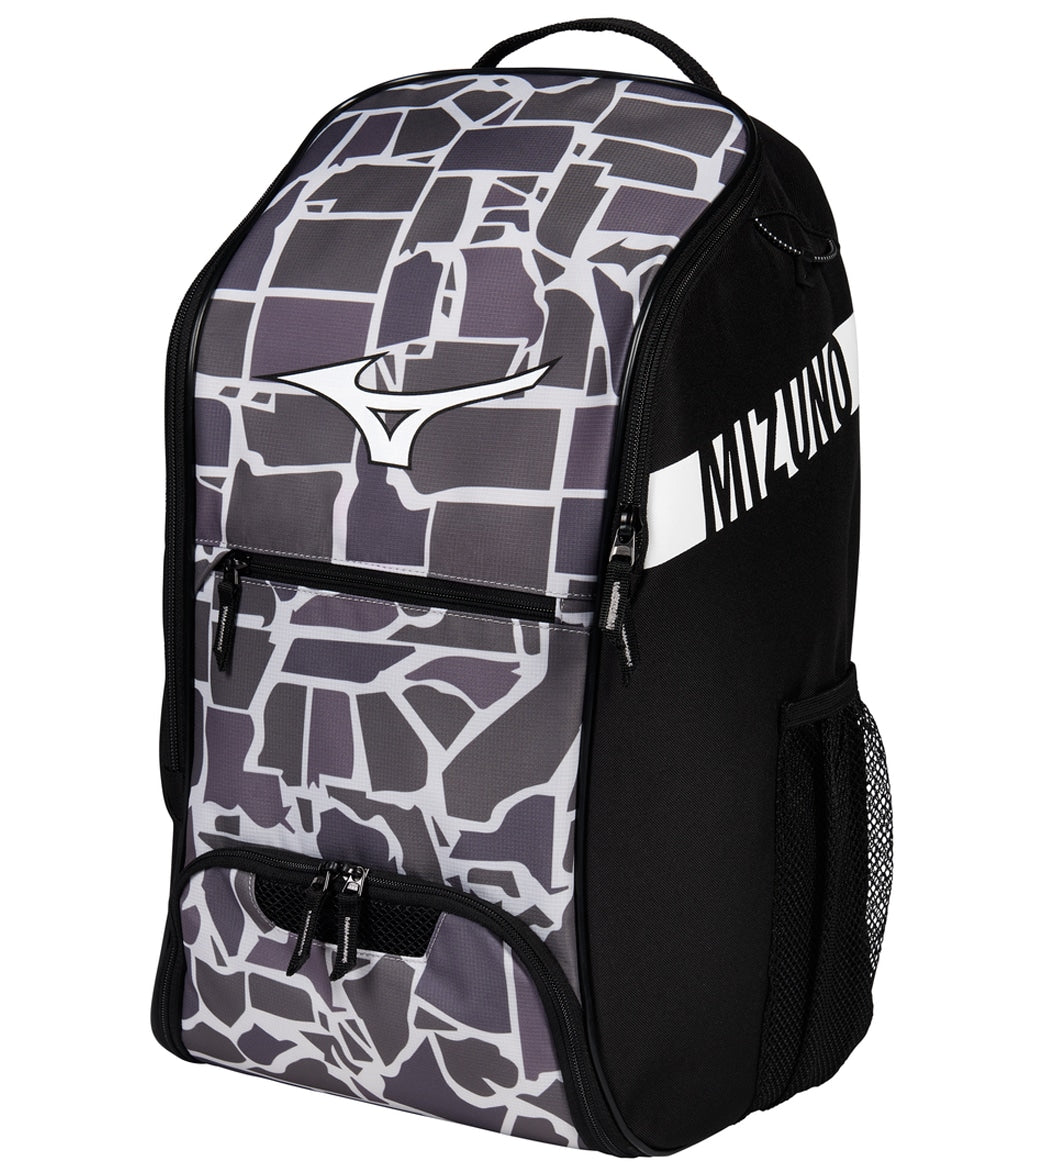 Mizuno Swimwear Crossover 22 Backpack at SwimOutlet.com